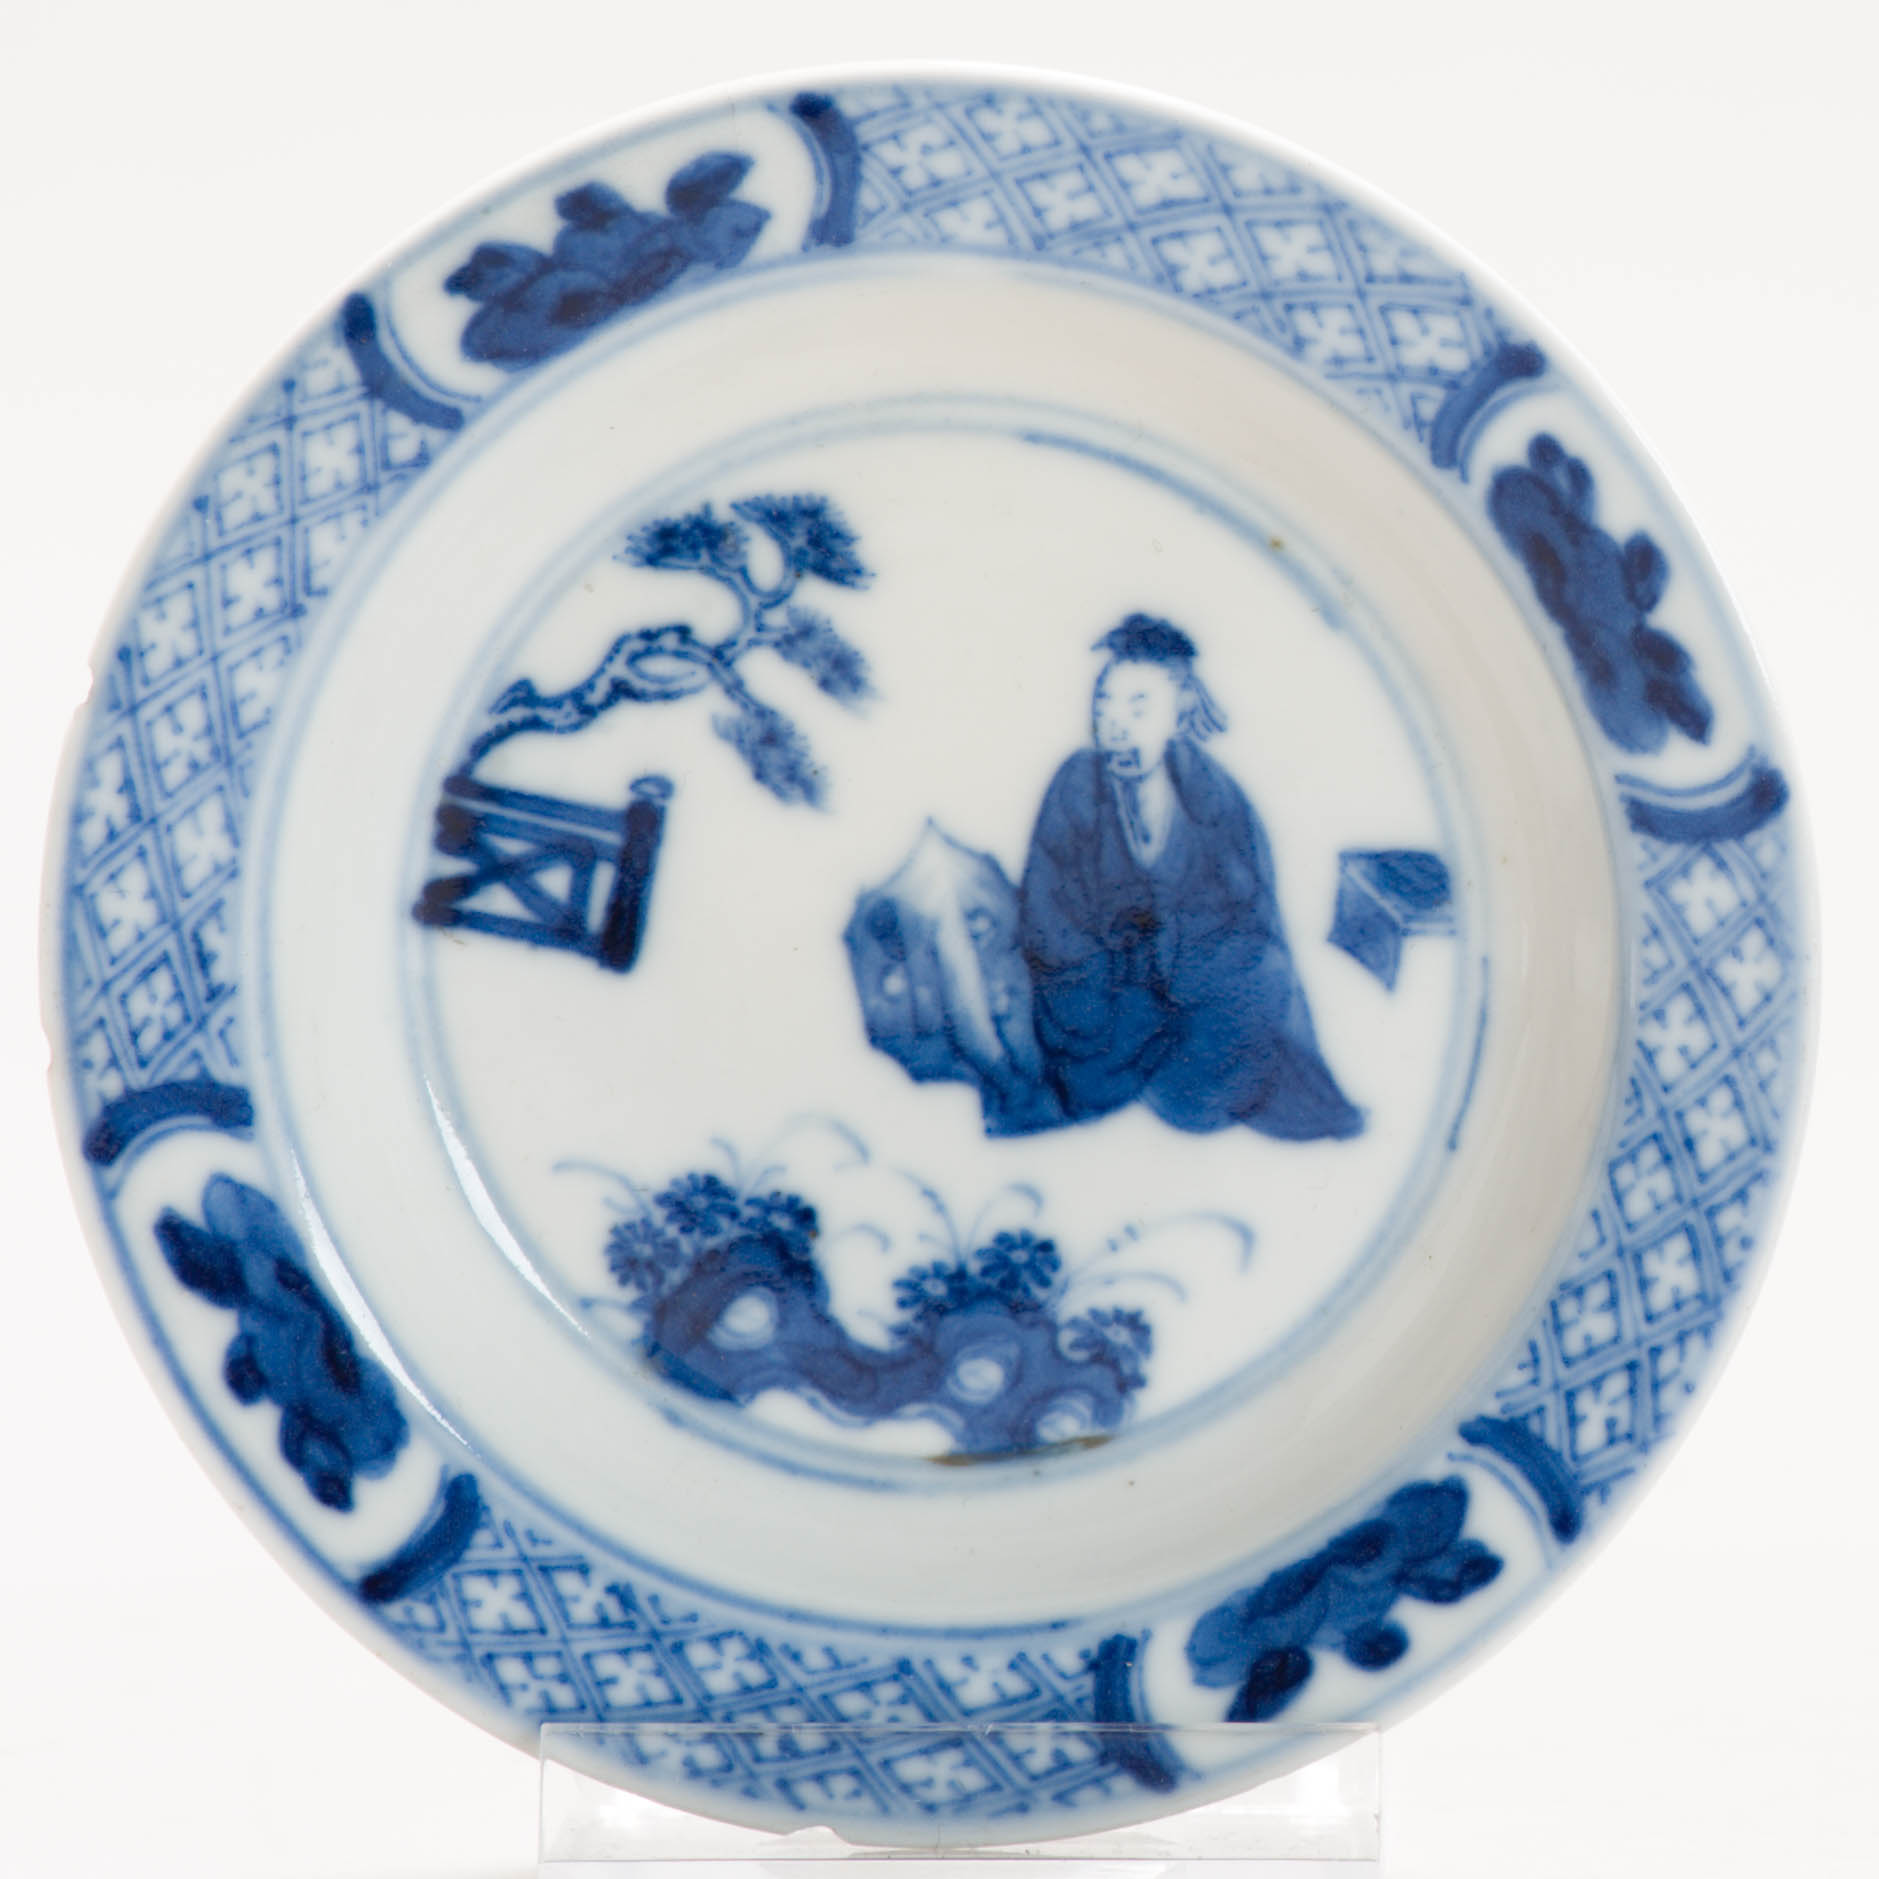 Miniature Chinese Kangxi Period Porcelain Dish Literatus in a garden scene